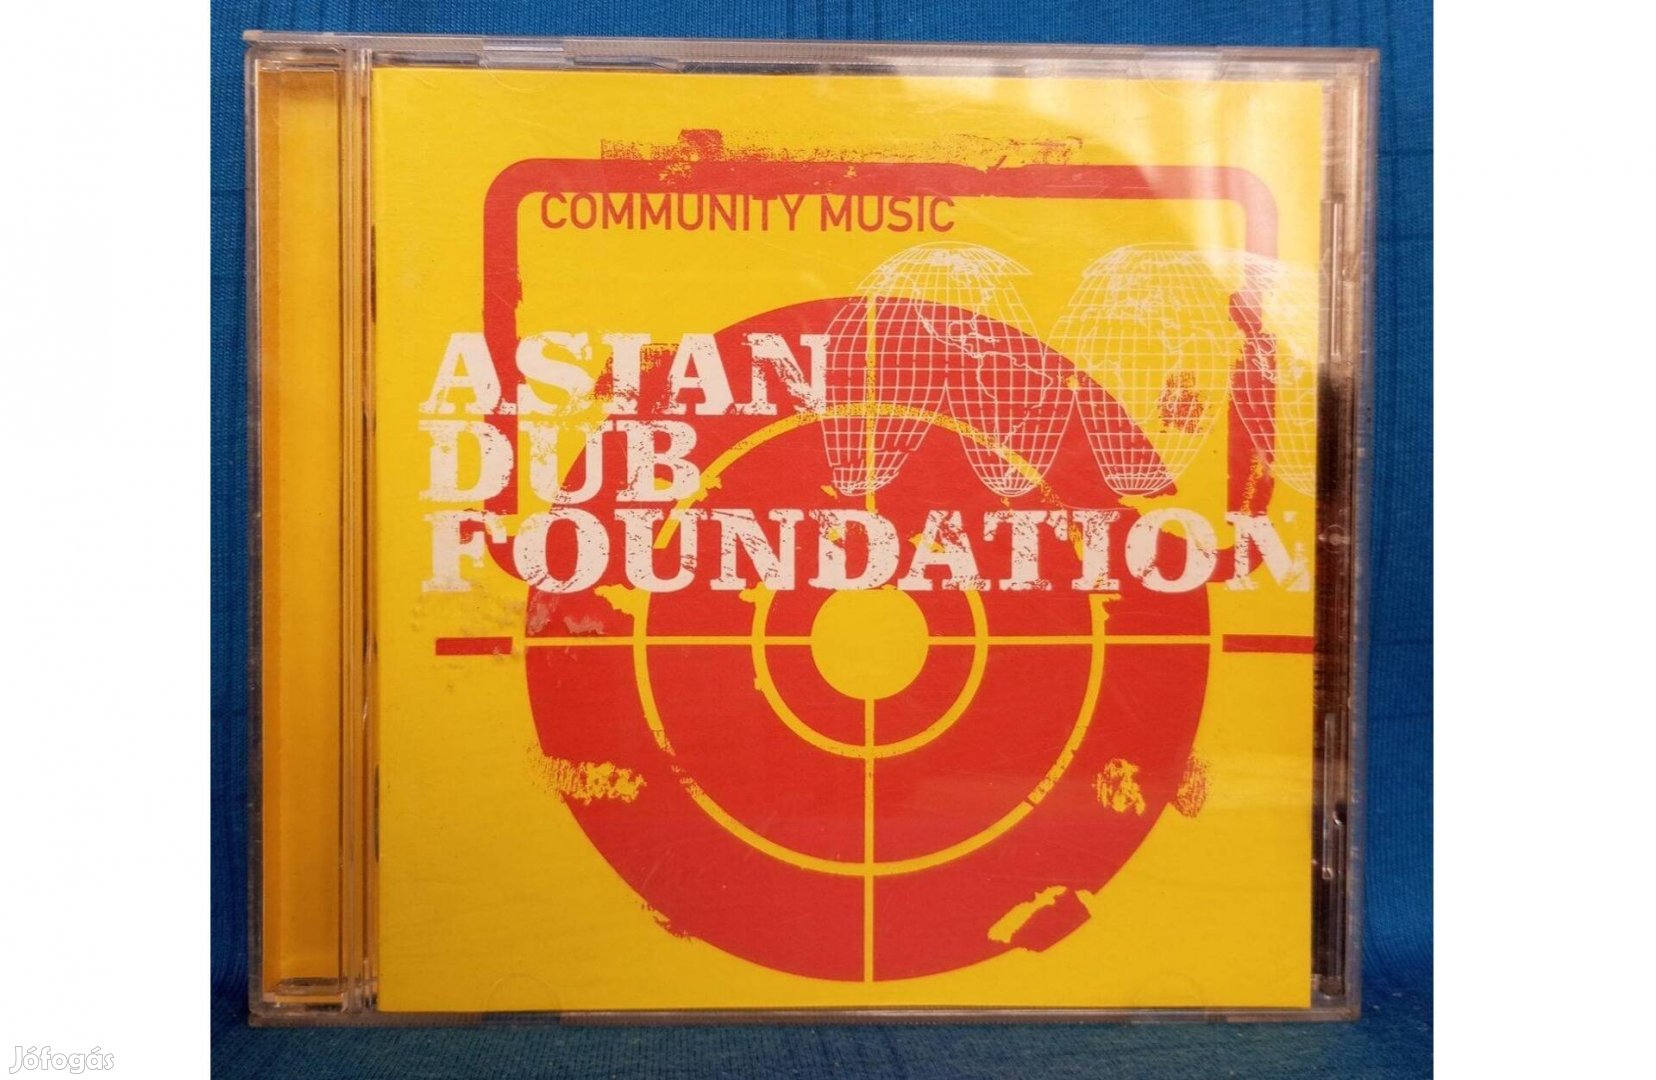 Asian Dub Foundation - Community Music CD,